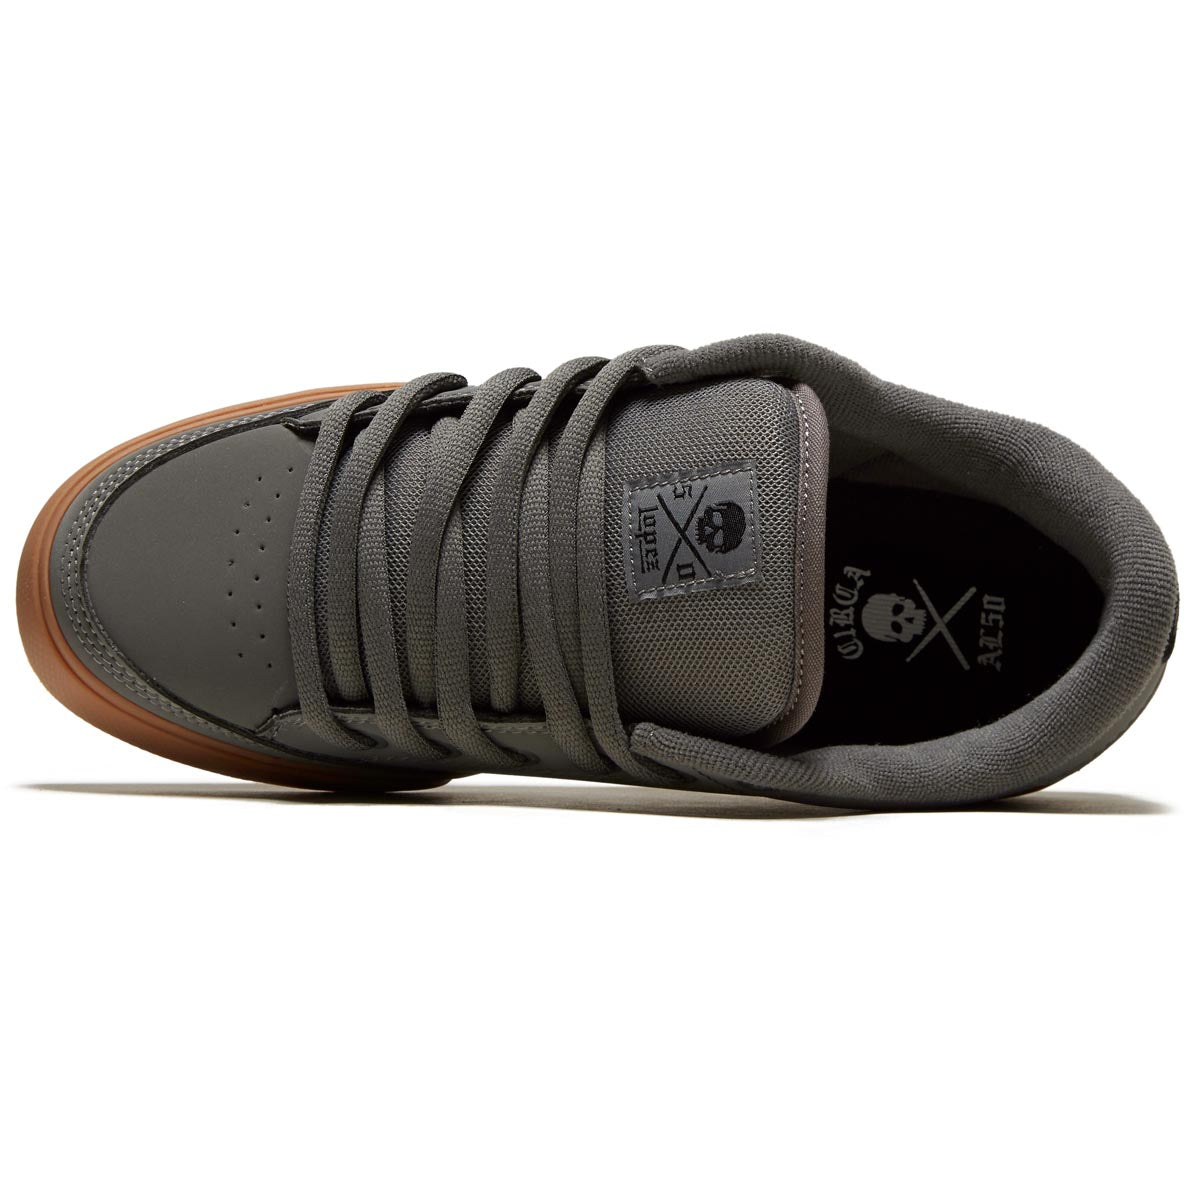 C1rca AL 50 Shoes - Grey/Gum image 3